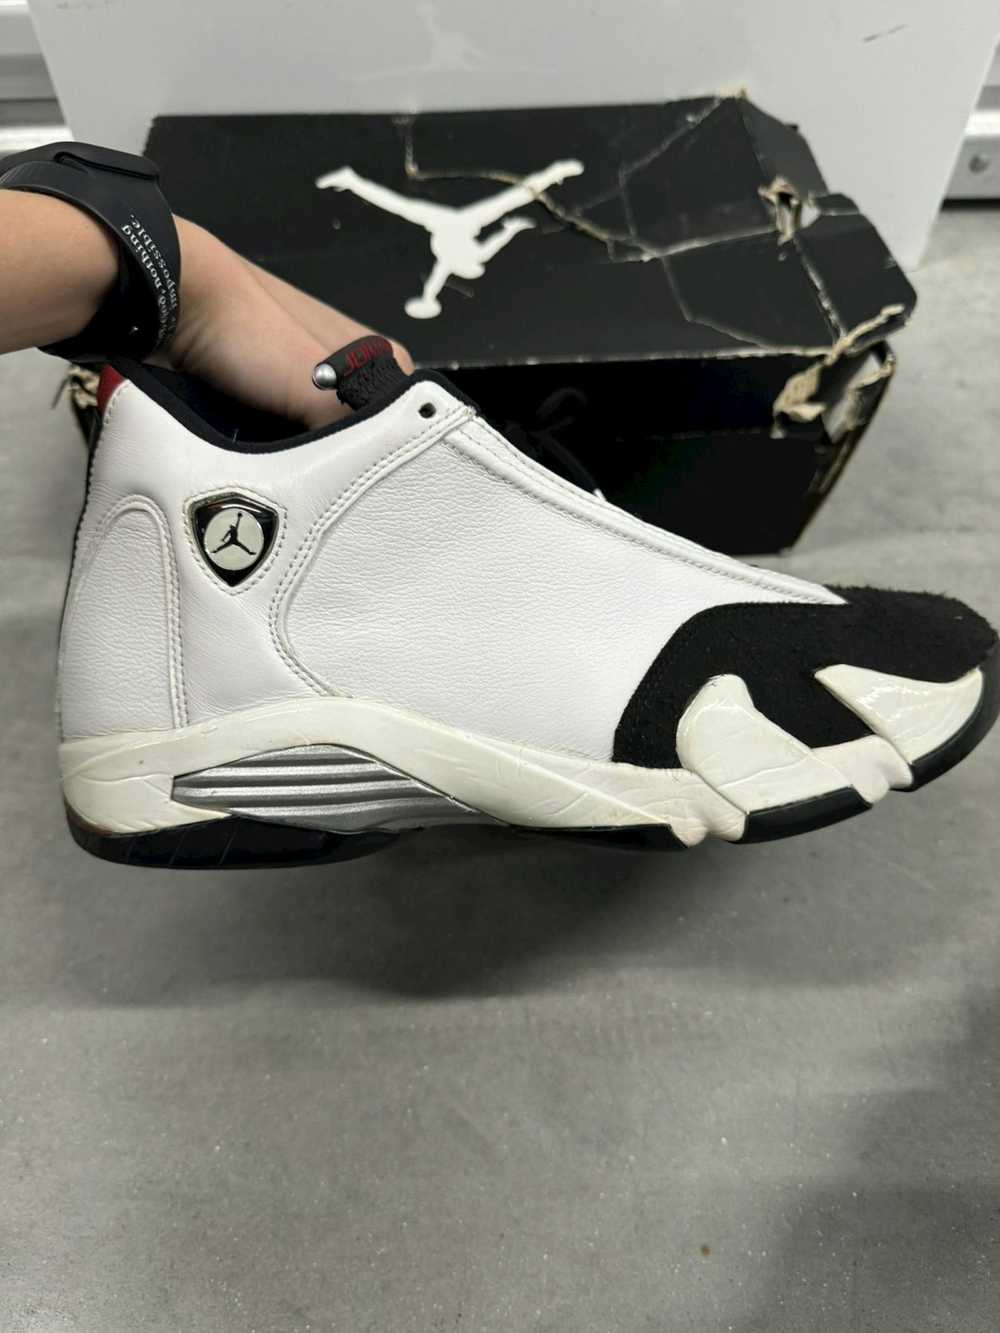 Jordan Brand Used Jordan 14 “Black Toe” 2014 - image 6